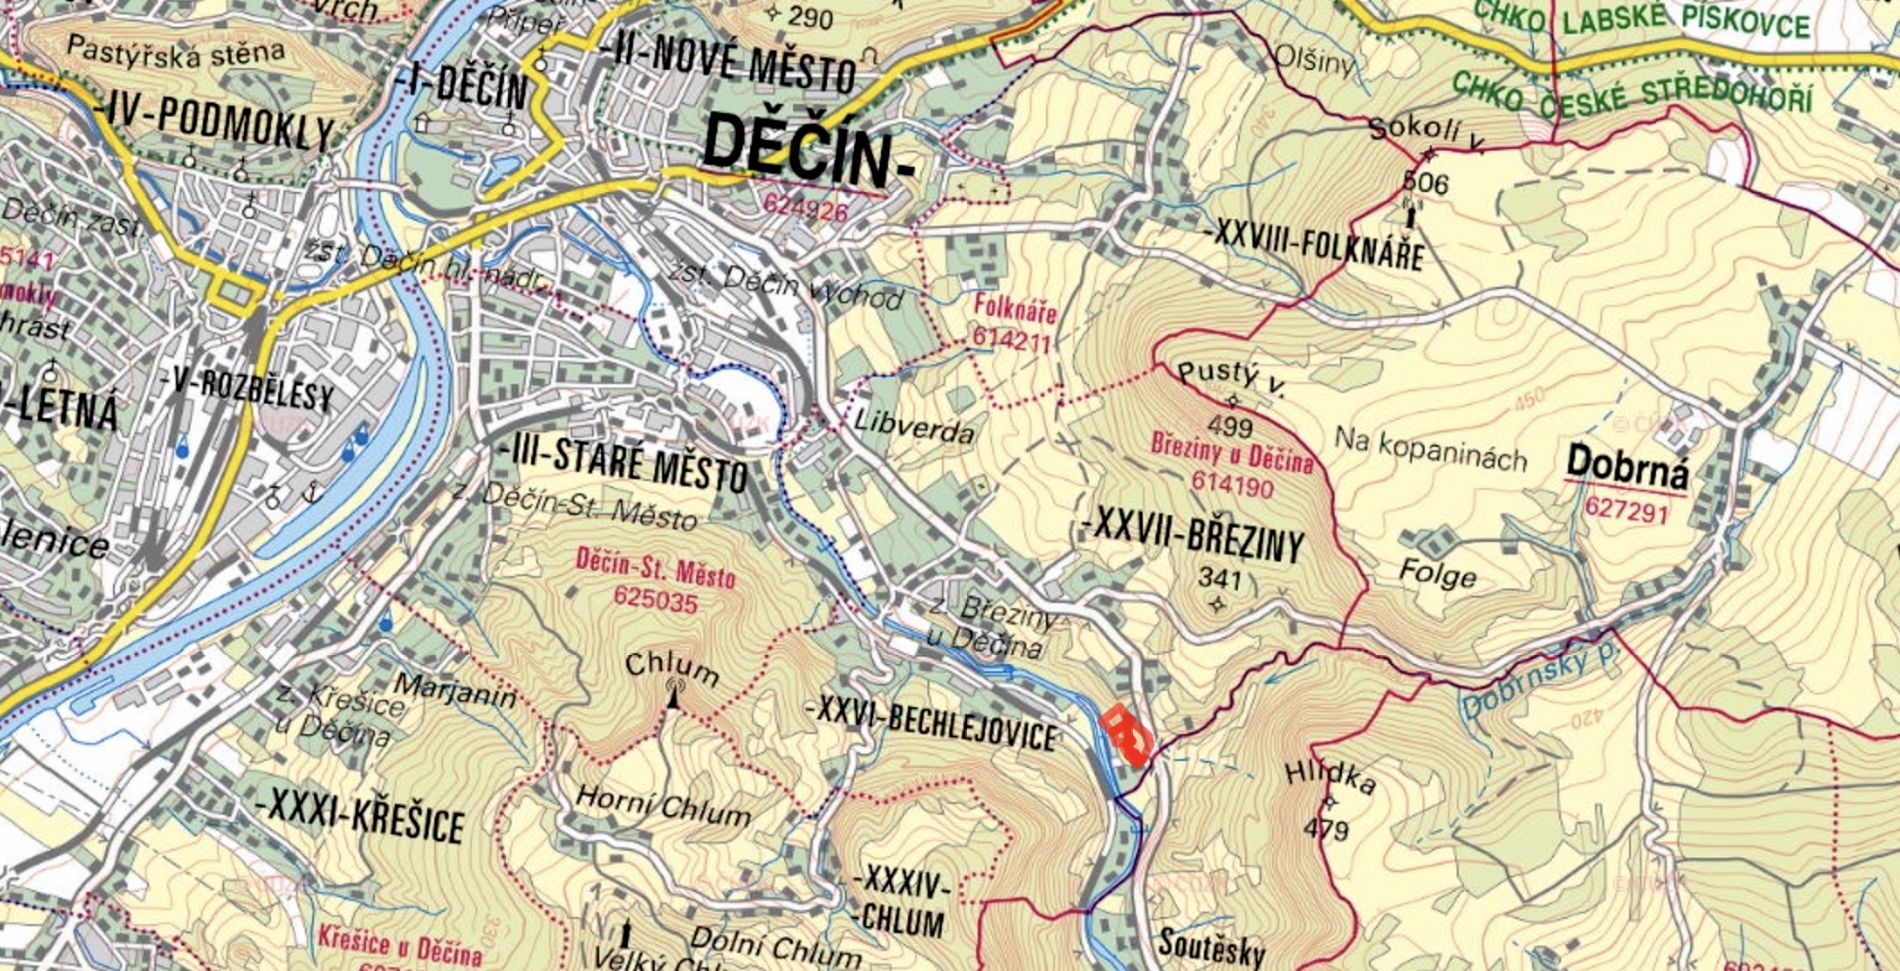 Les, prodej, Děčín XXVII-Březiny, Děčín, obrázek č. 3